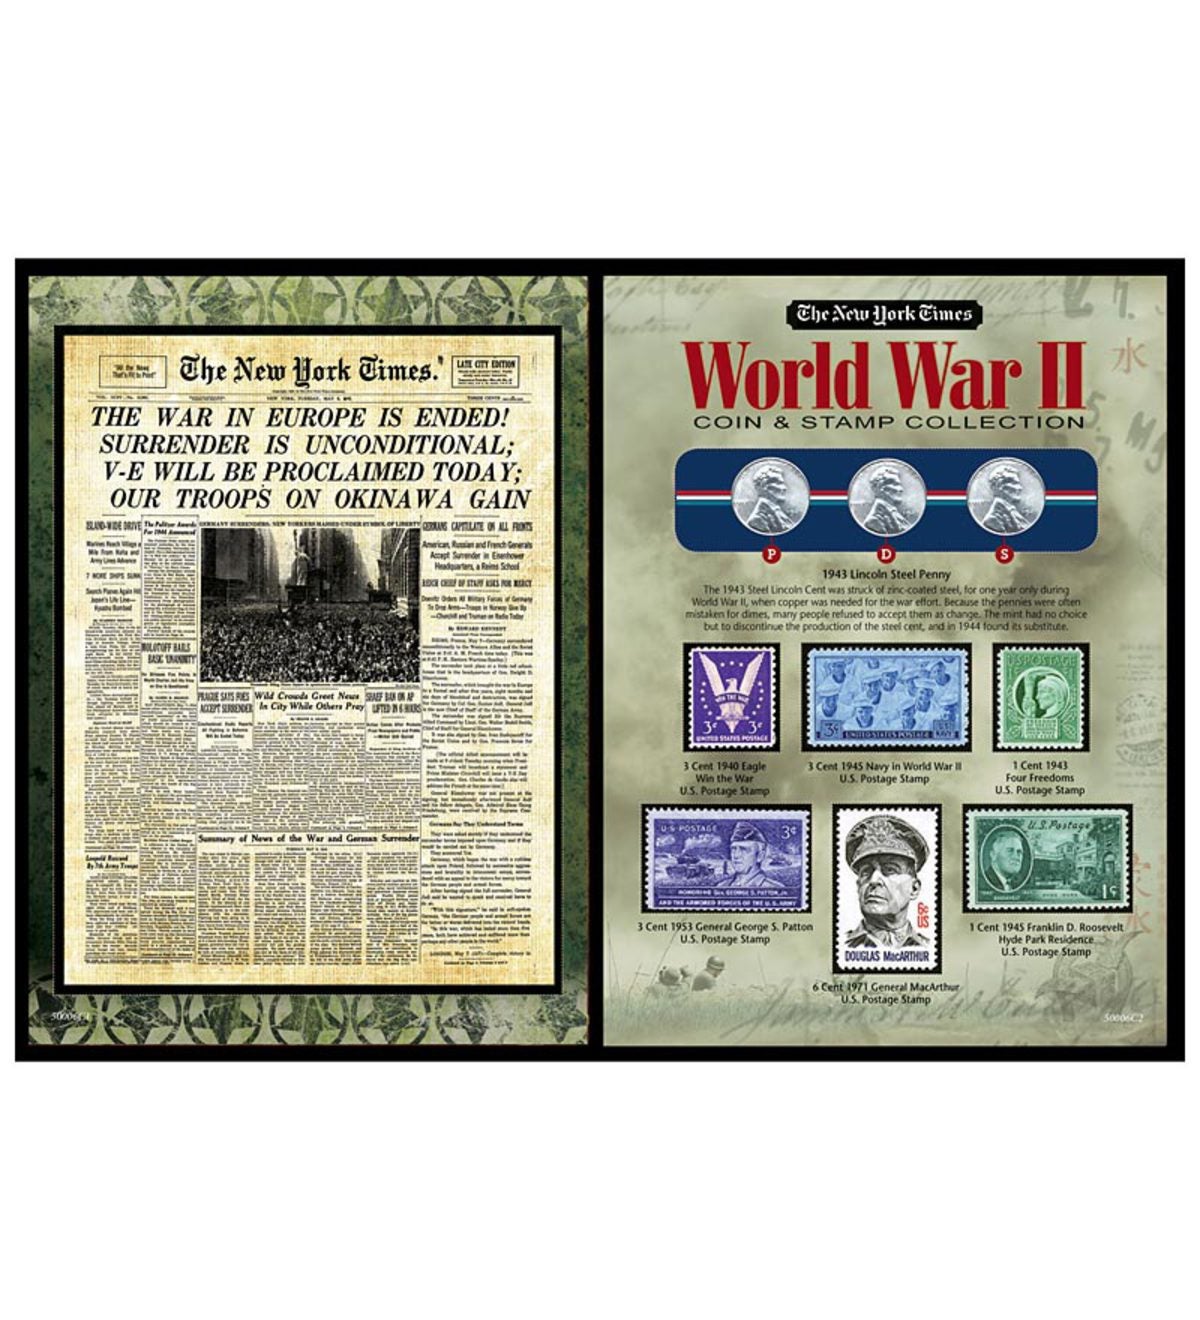 New York Times World War II Coin and Stamp Portfolio